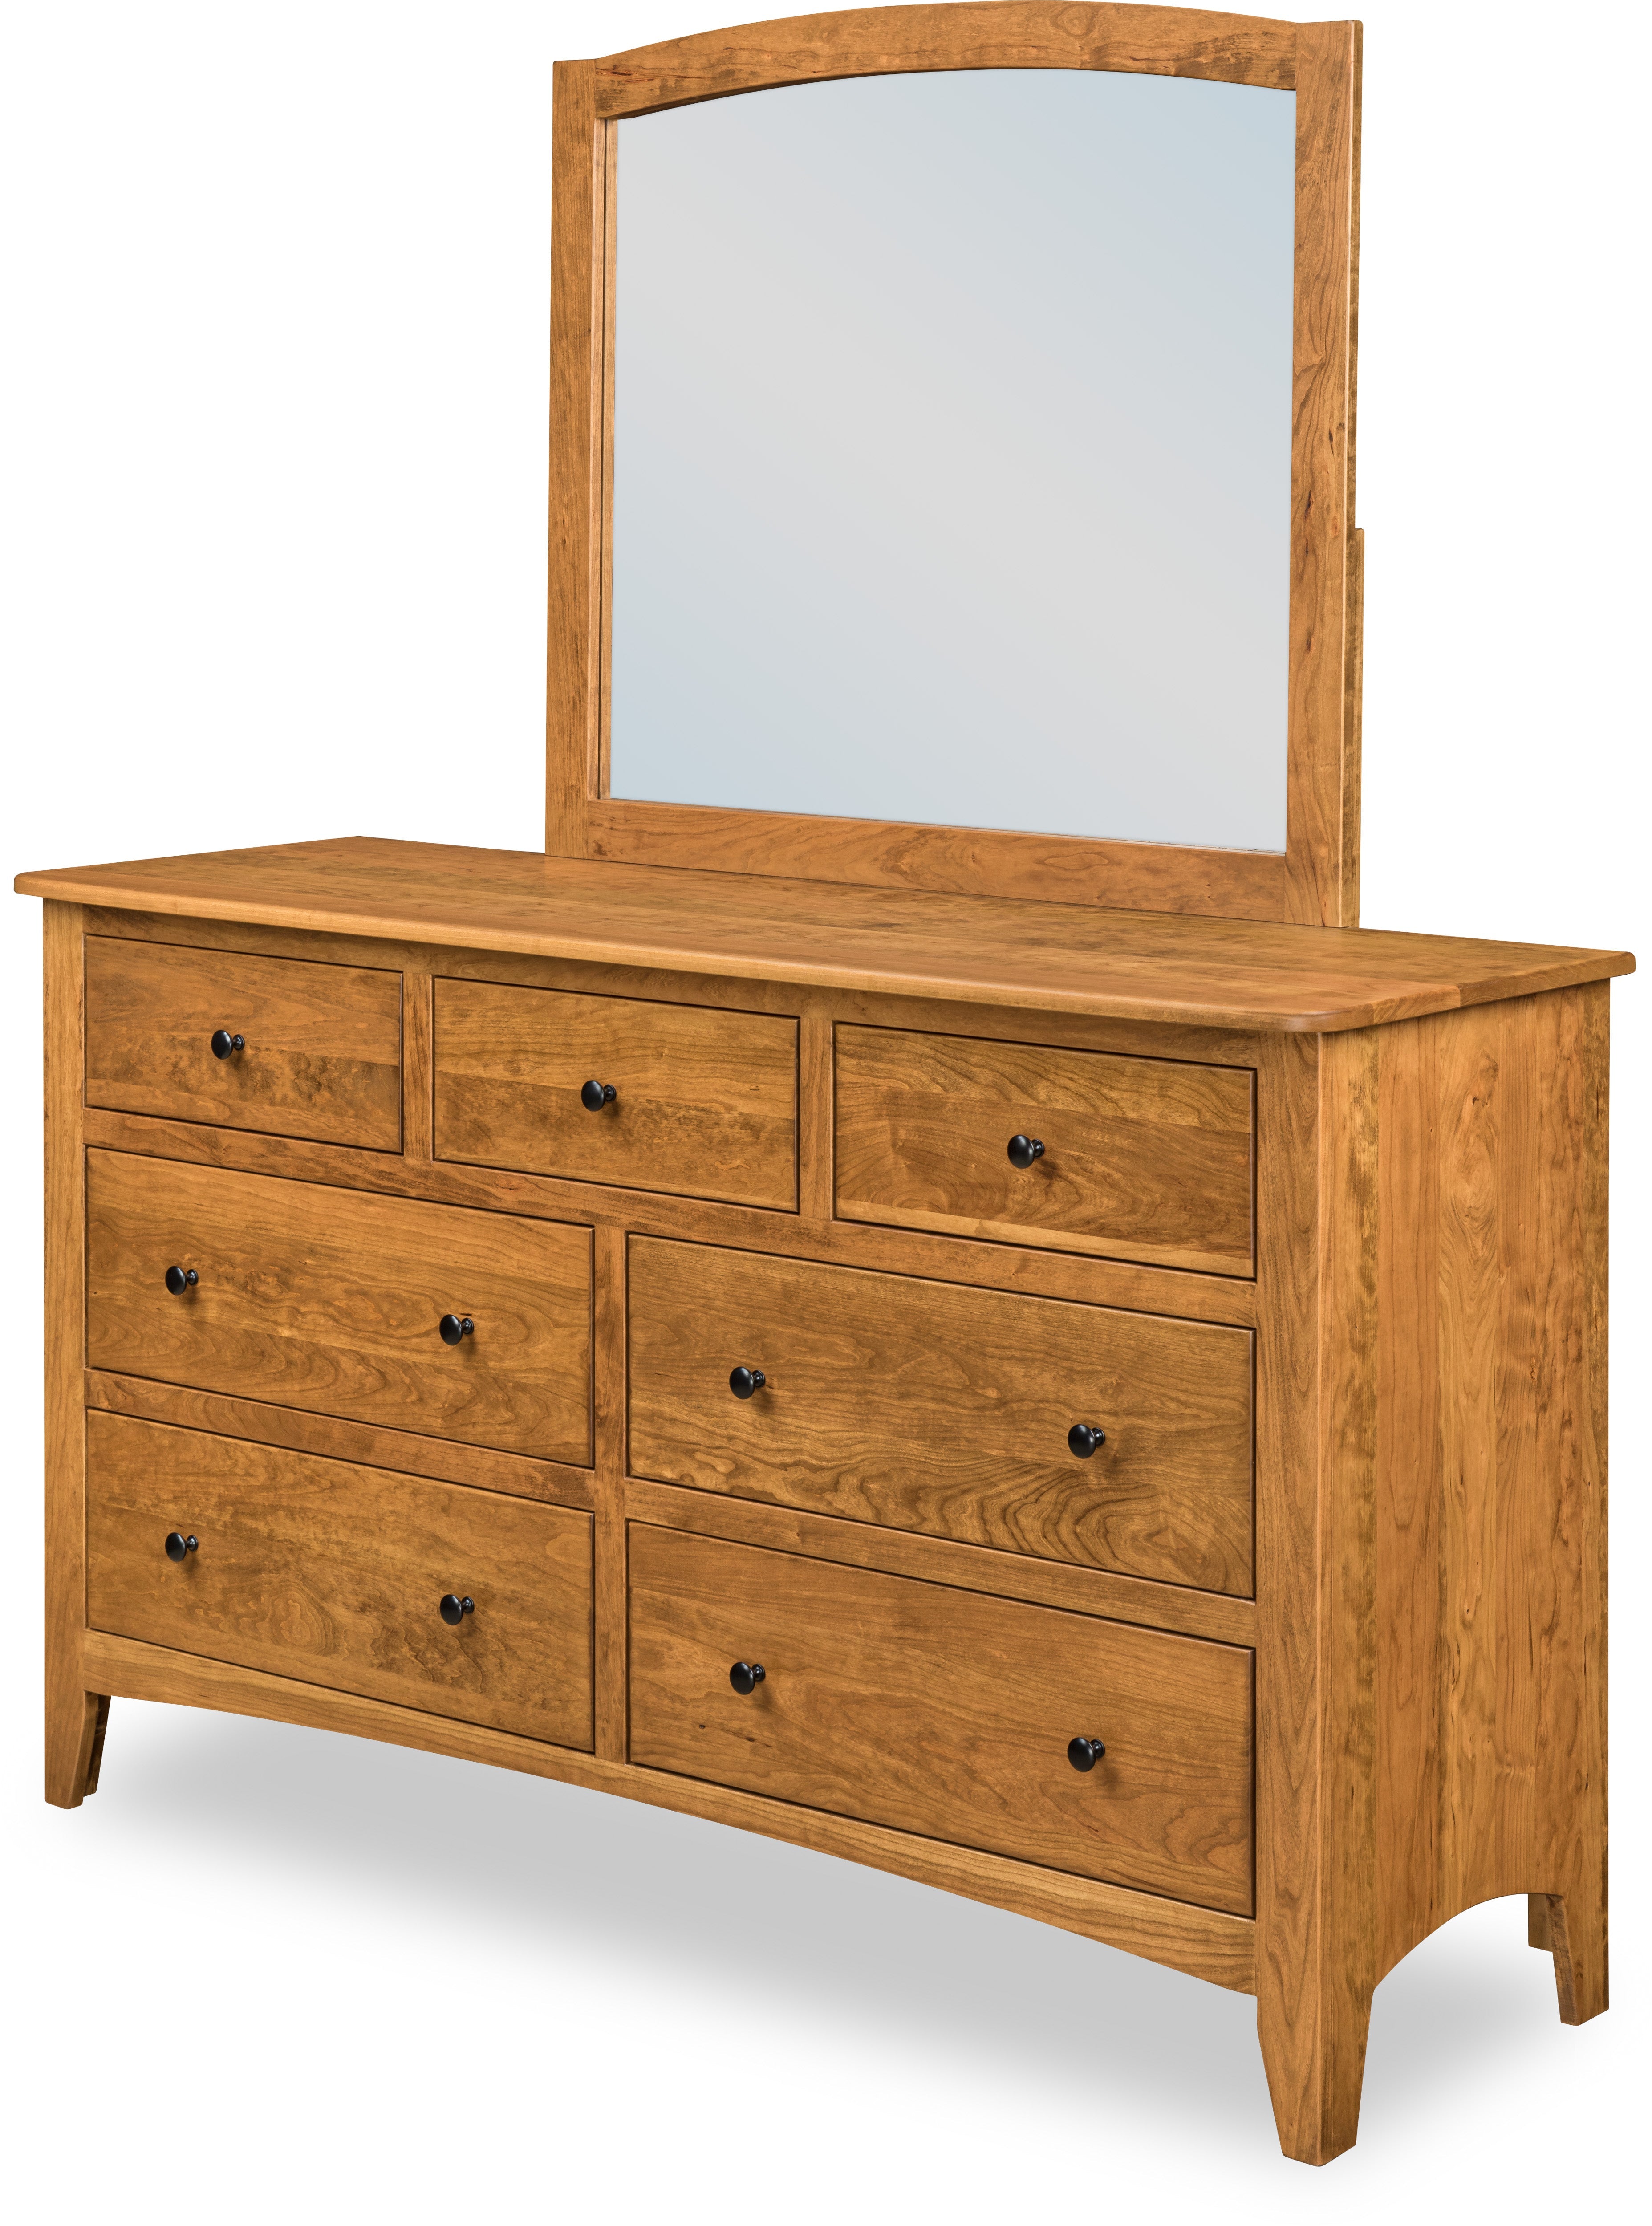 celina standard dresser in sap cherry wood with medium walnut stain